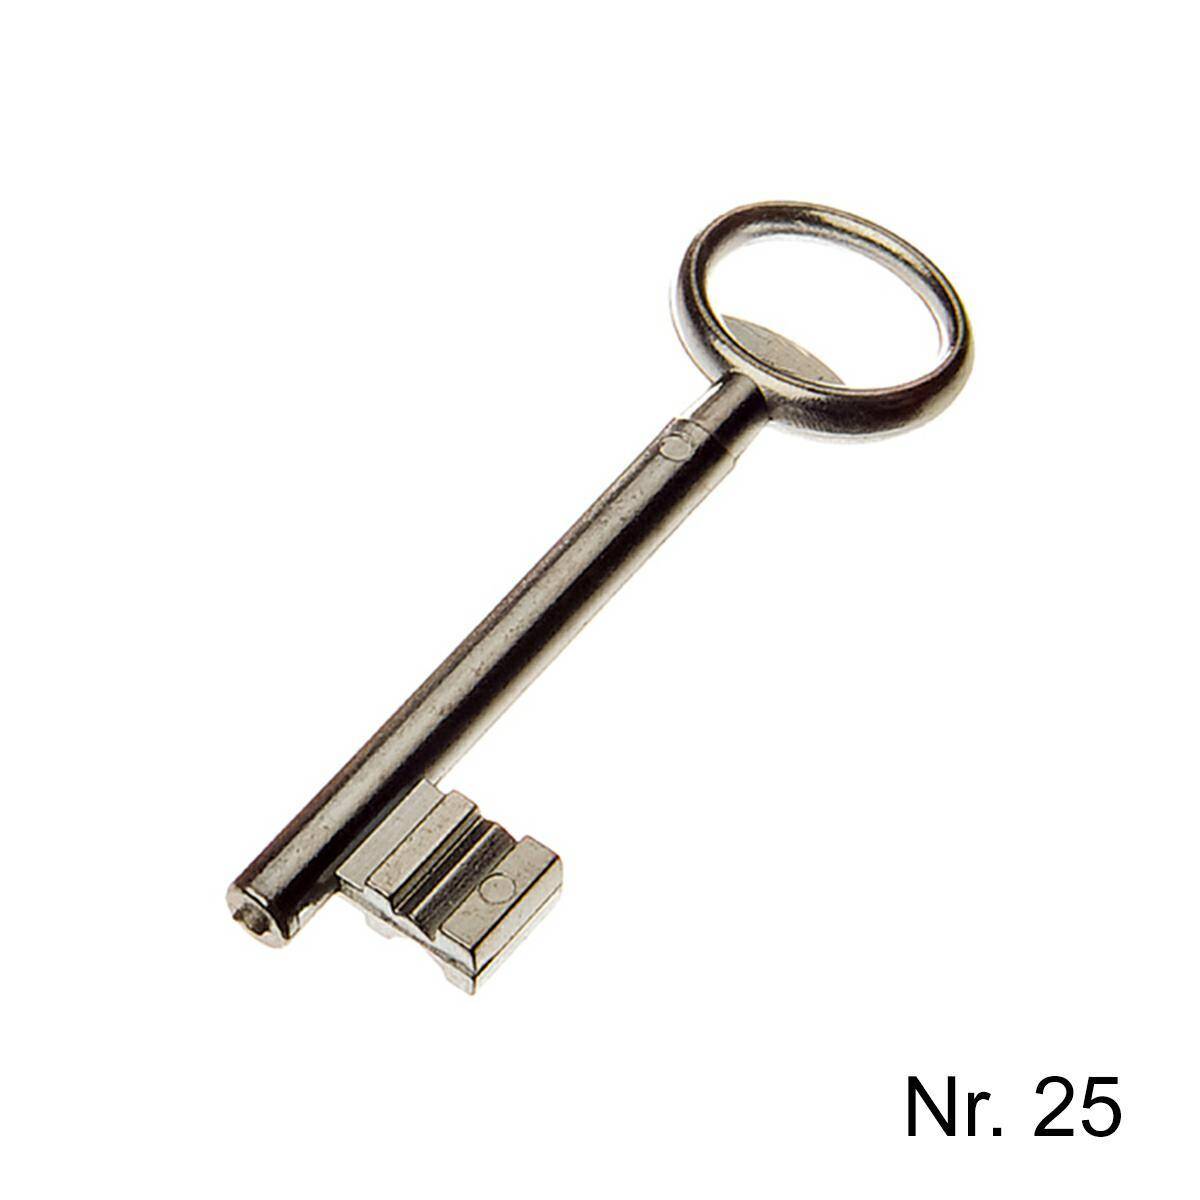 Cast key Jania for the lock - No. 25